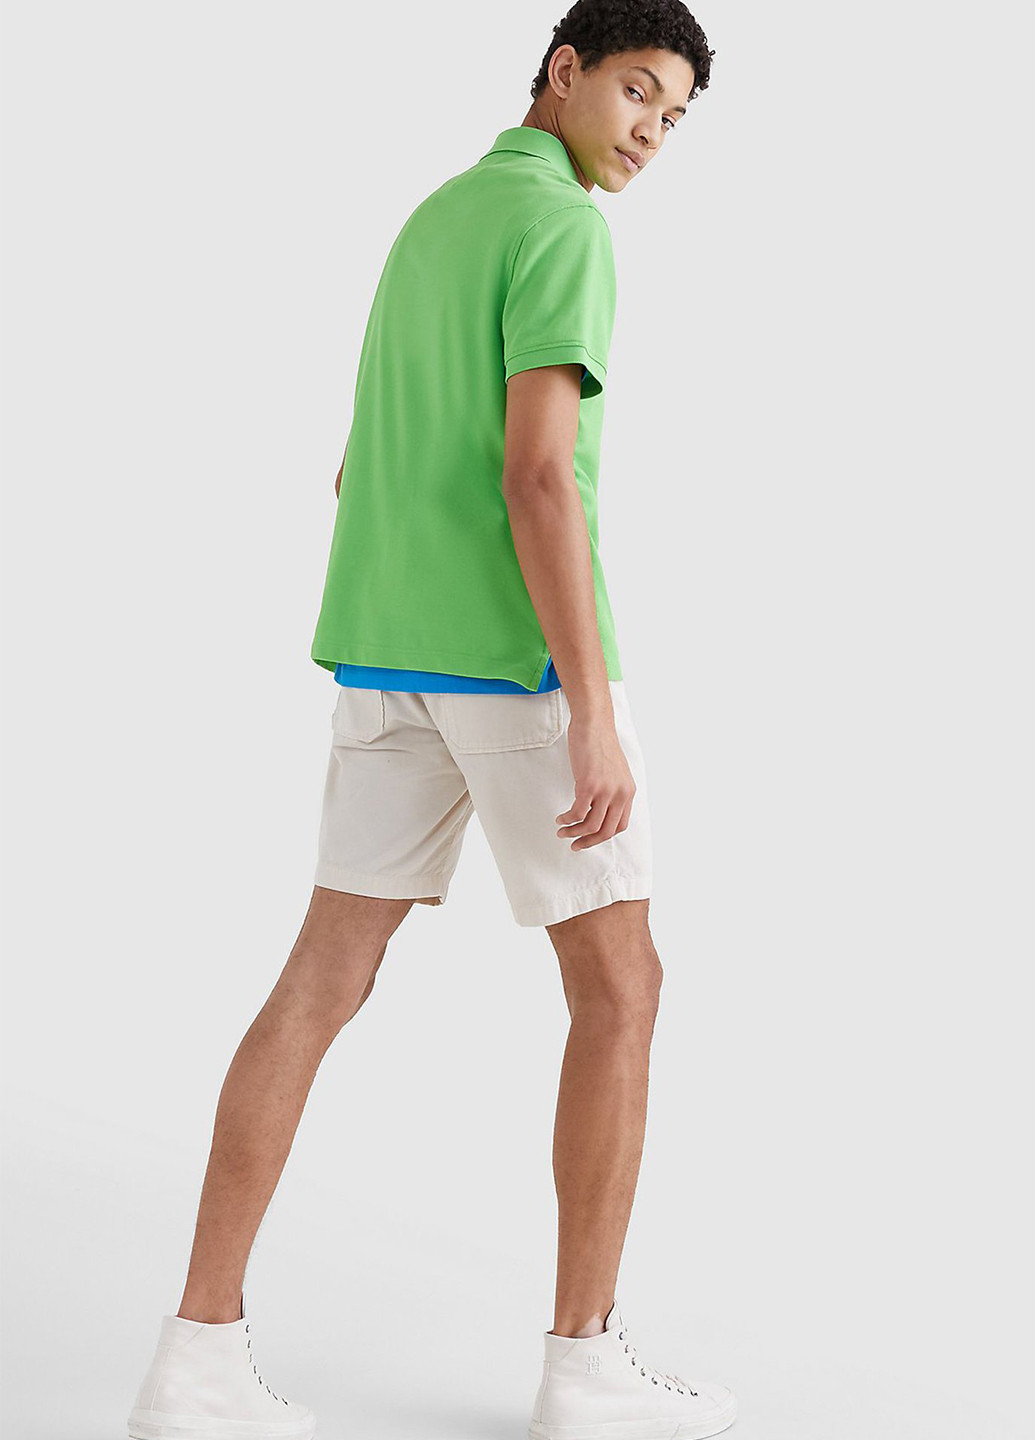 Зеленая футболка-поло для мужчин Tommy Hilfiger однотонная